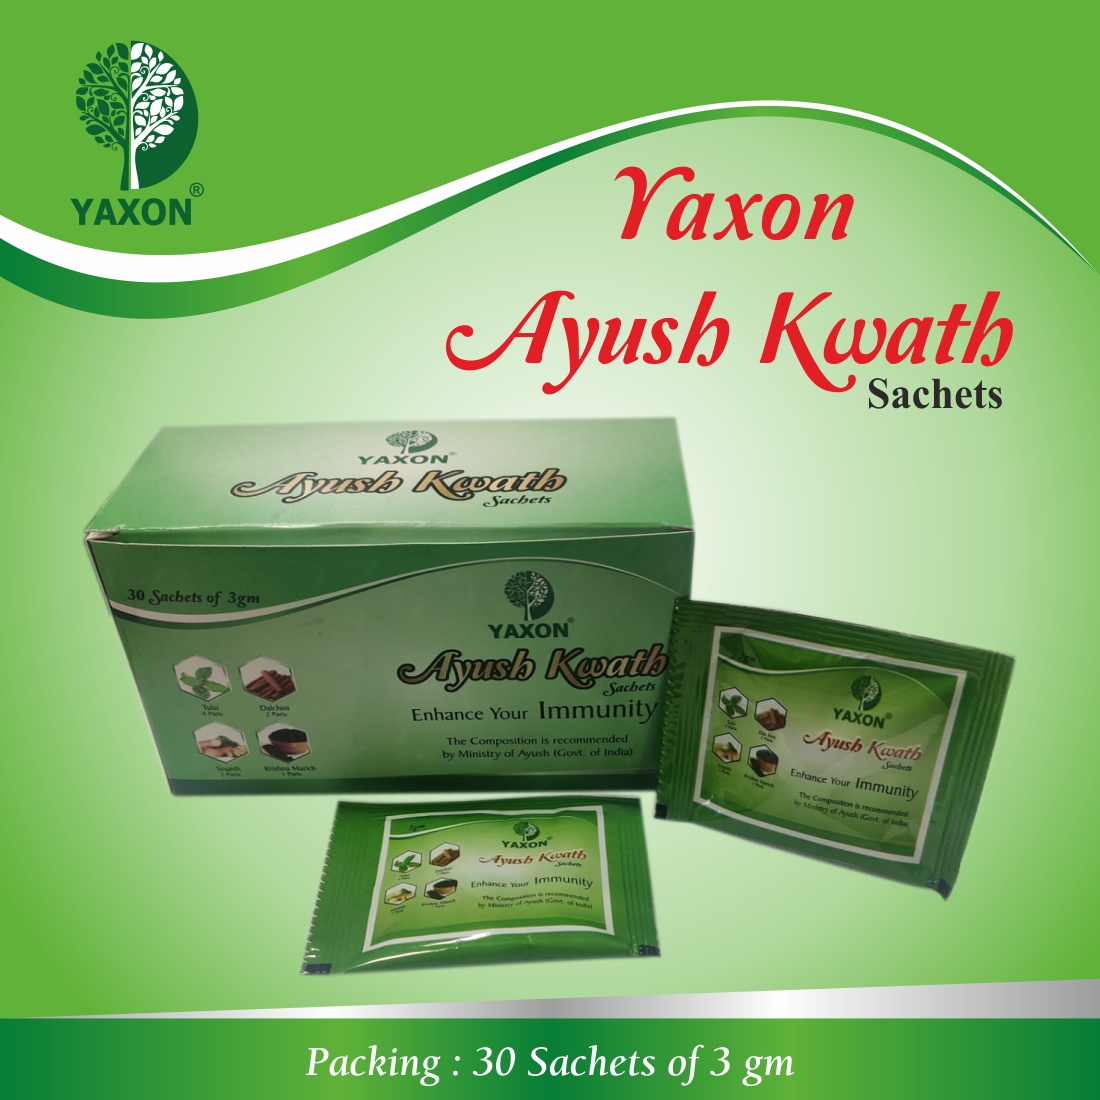 YAXON AYUSH KWATH 30 Sachet Box Pack